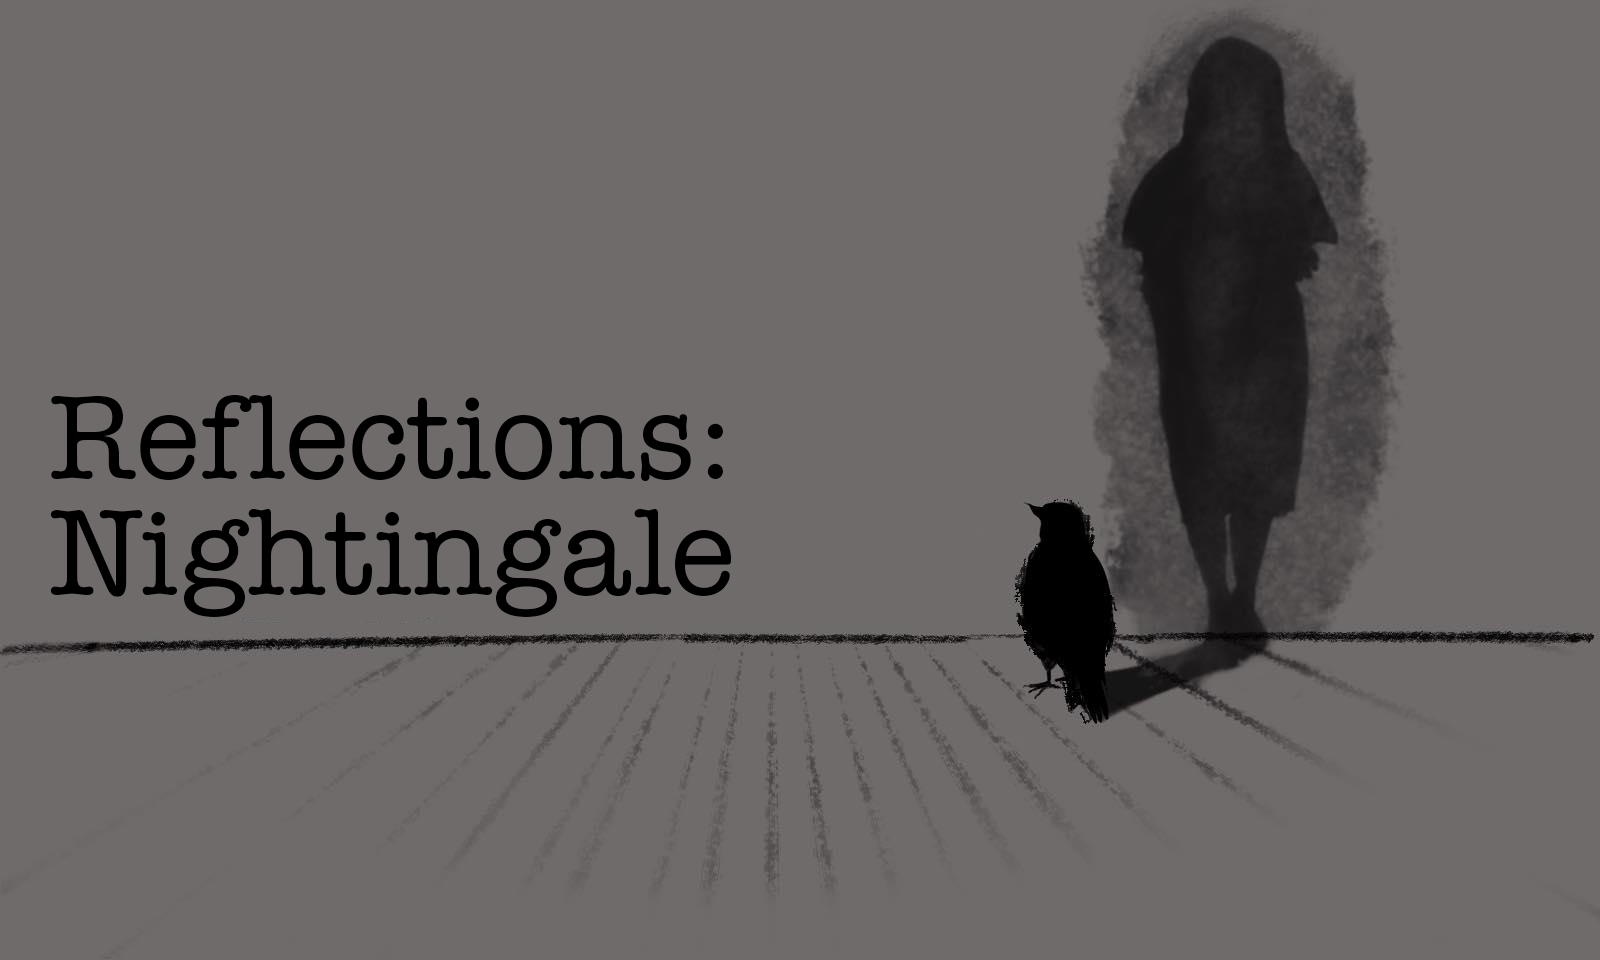 Reflections: Nightingale